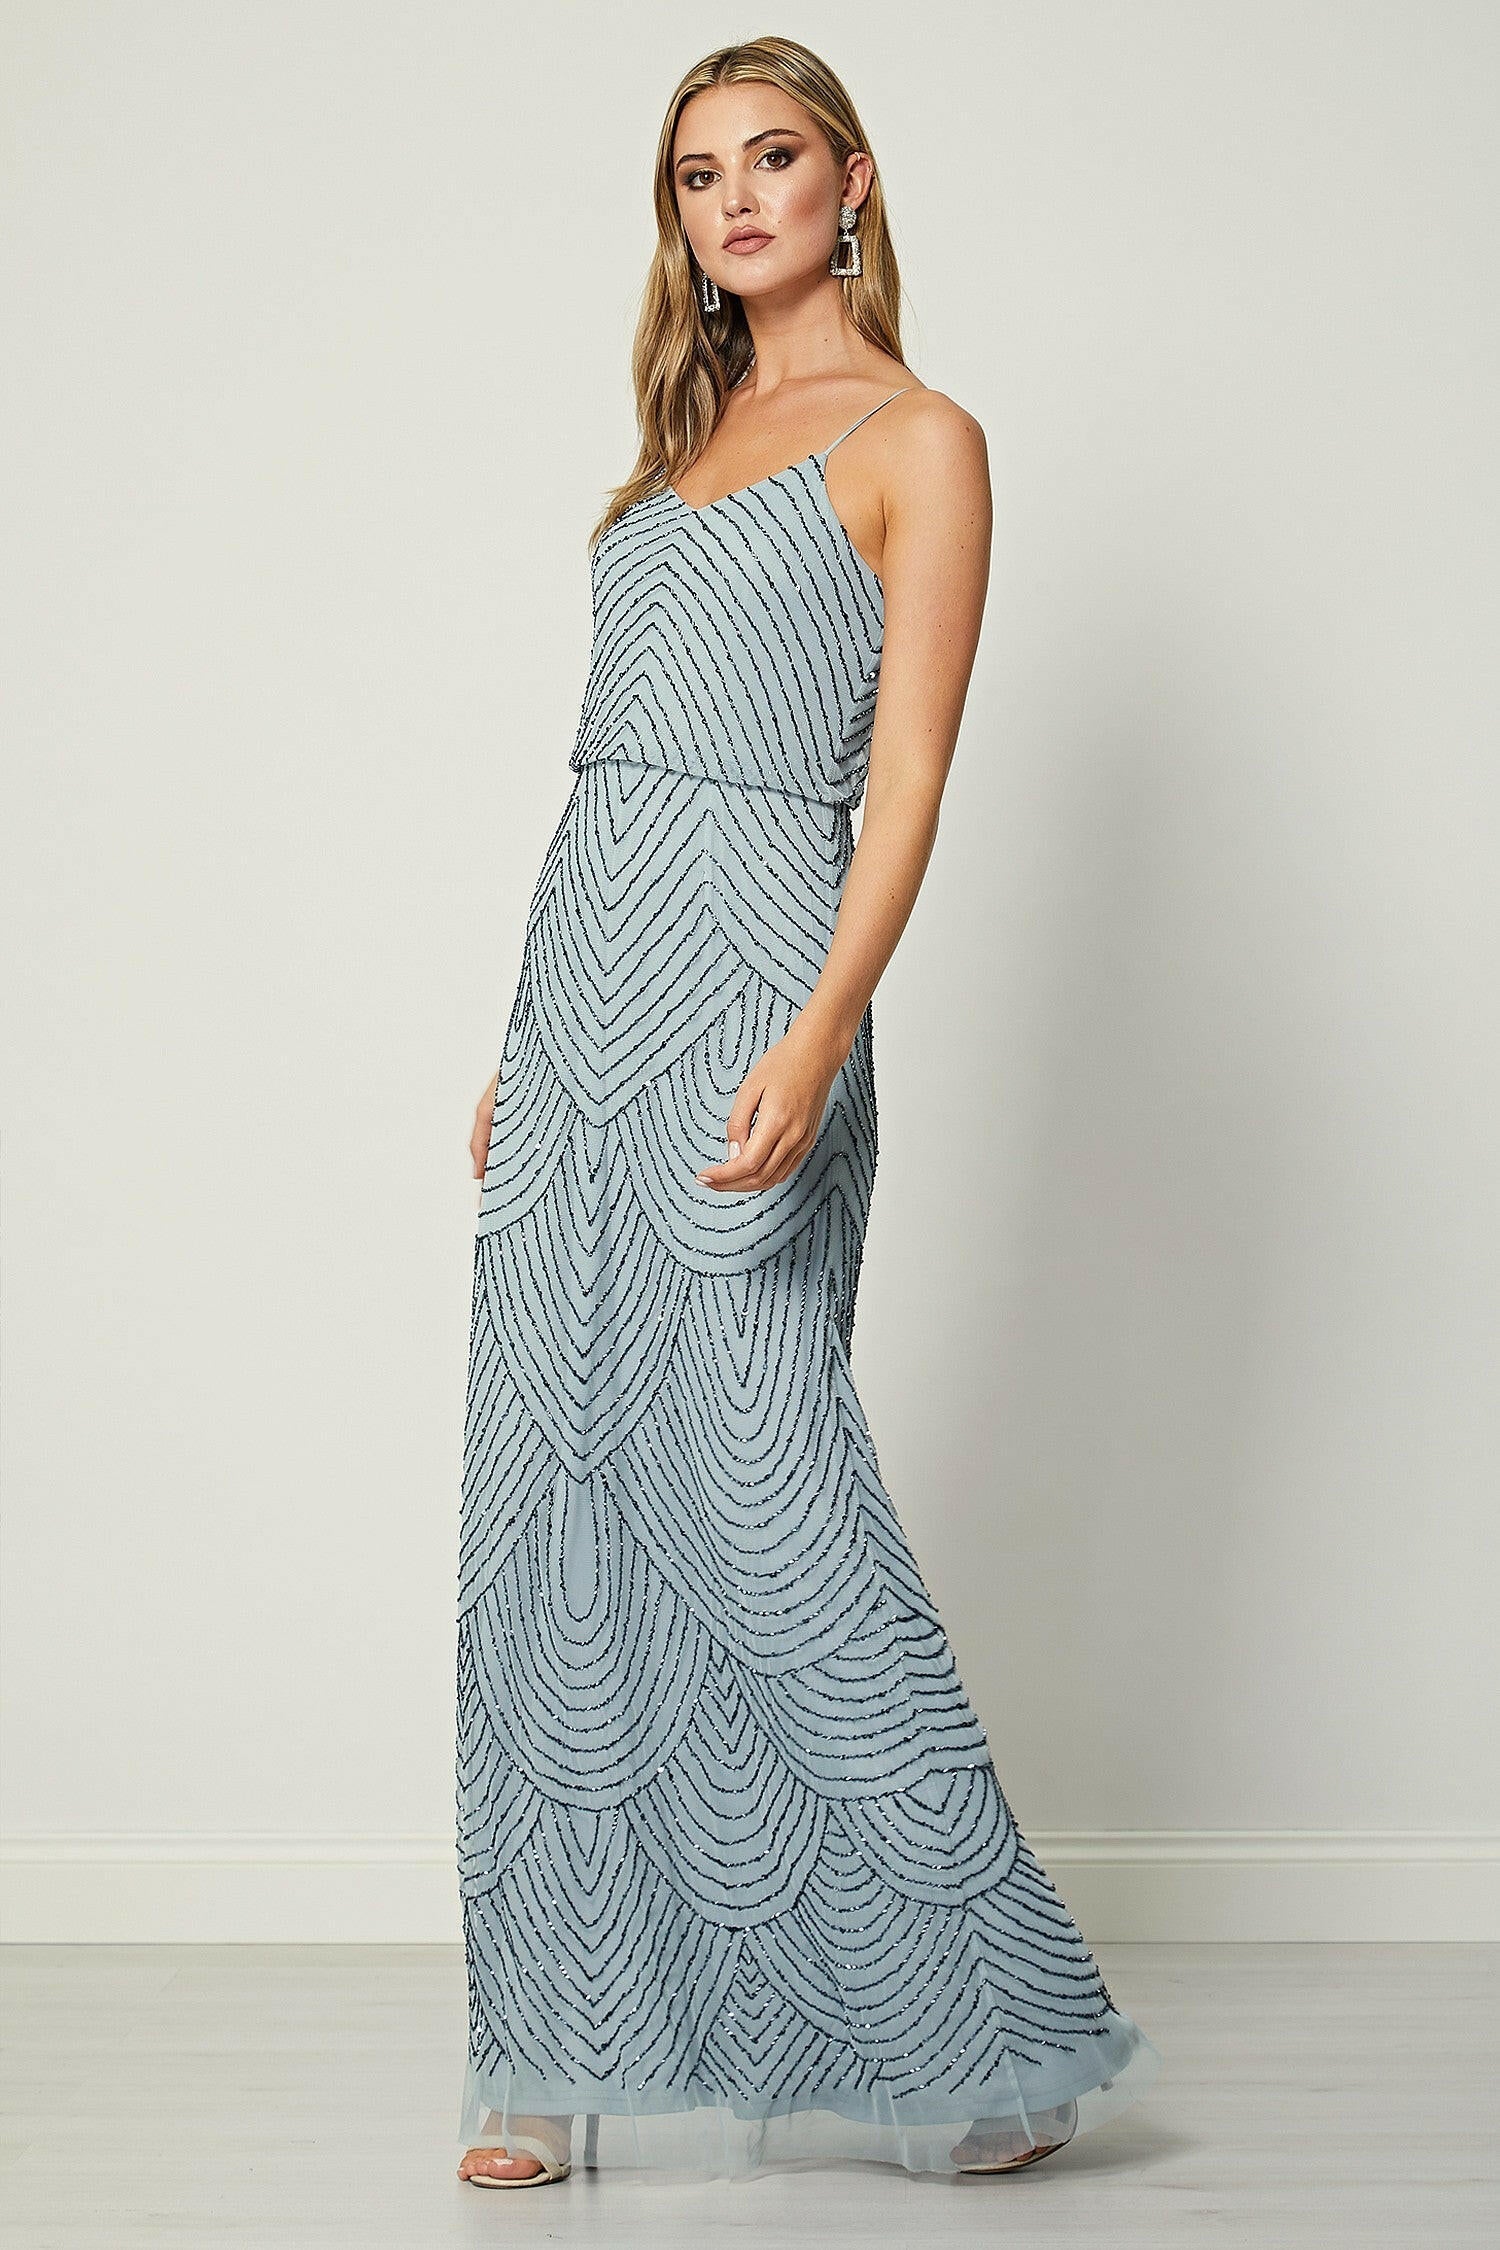 Viviana Blue Cami Sequin Stripe Embellished Maxi Dress